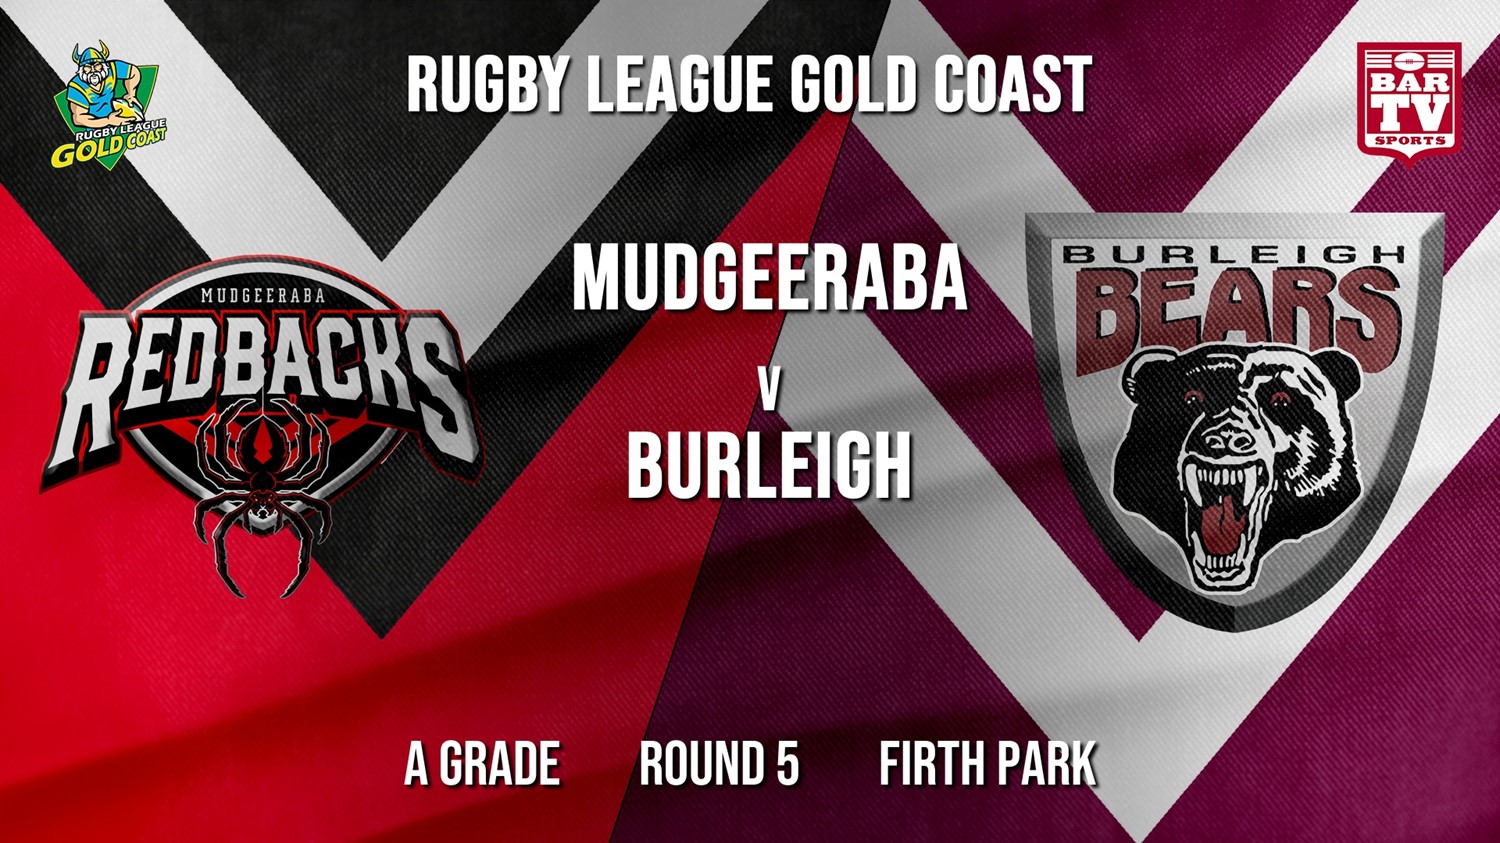 RLGC Round 5 - A Grade - Mudgeeraba Redbacks v Burleigh Bears Minigame Slate Image